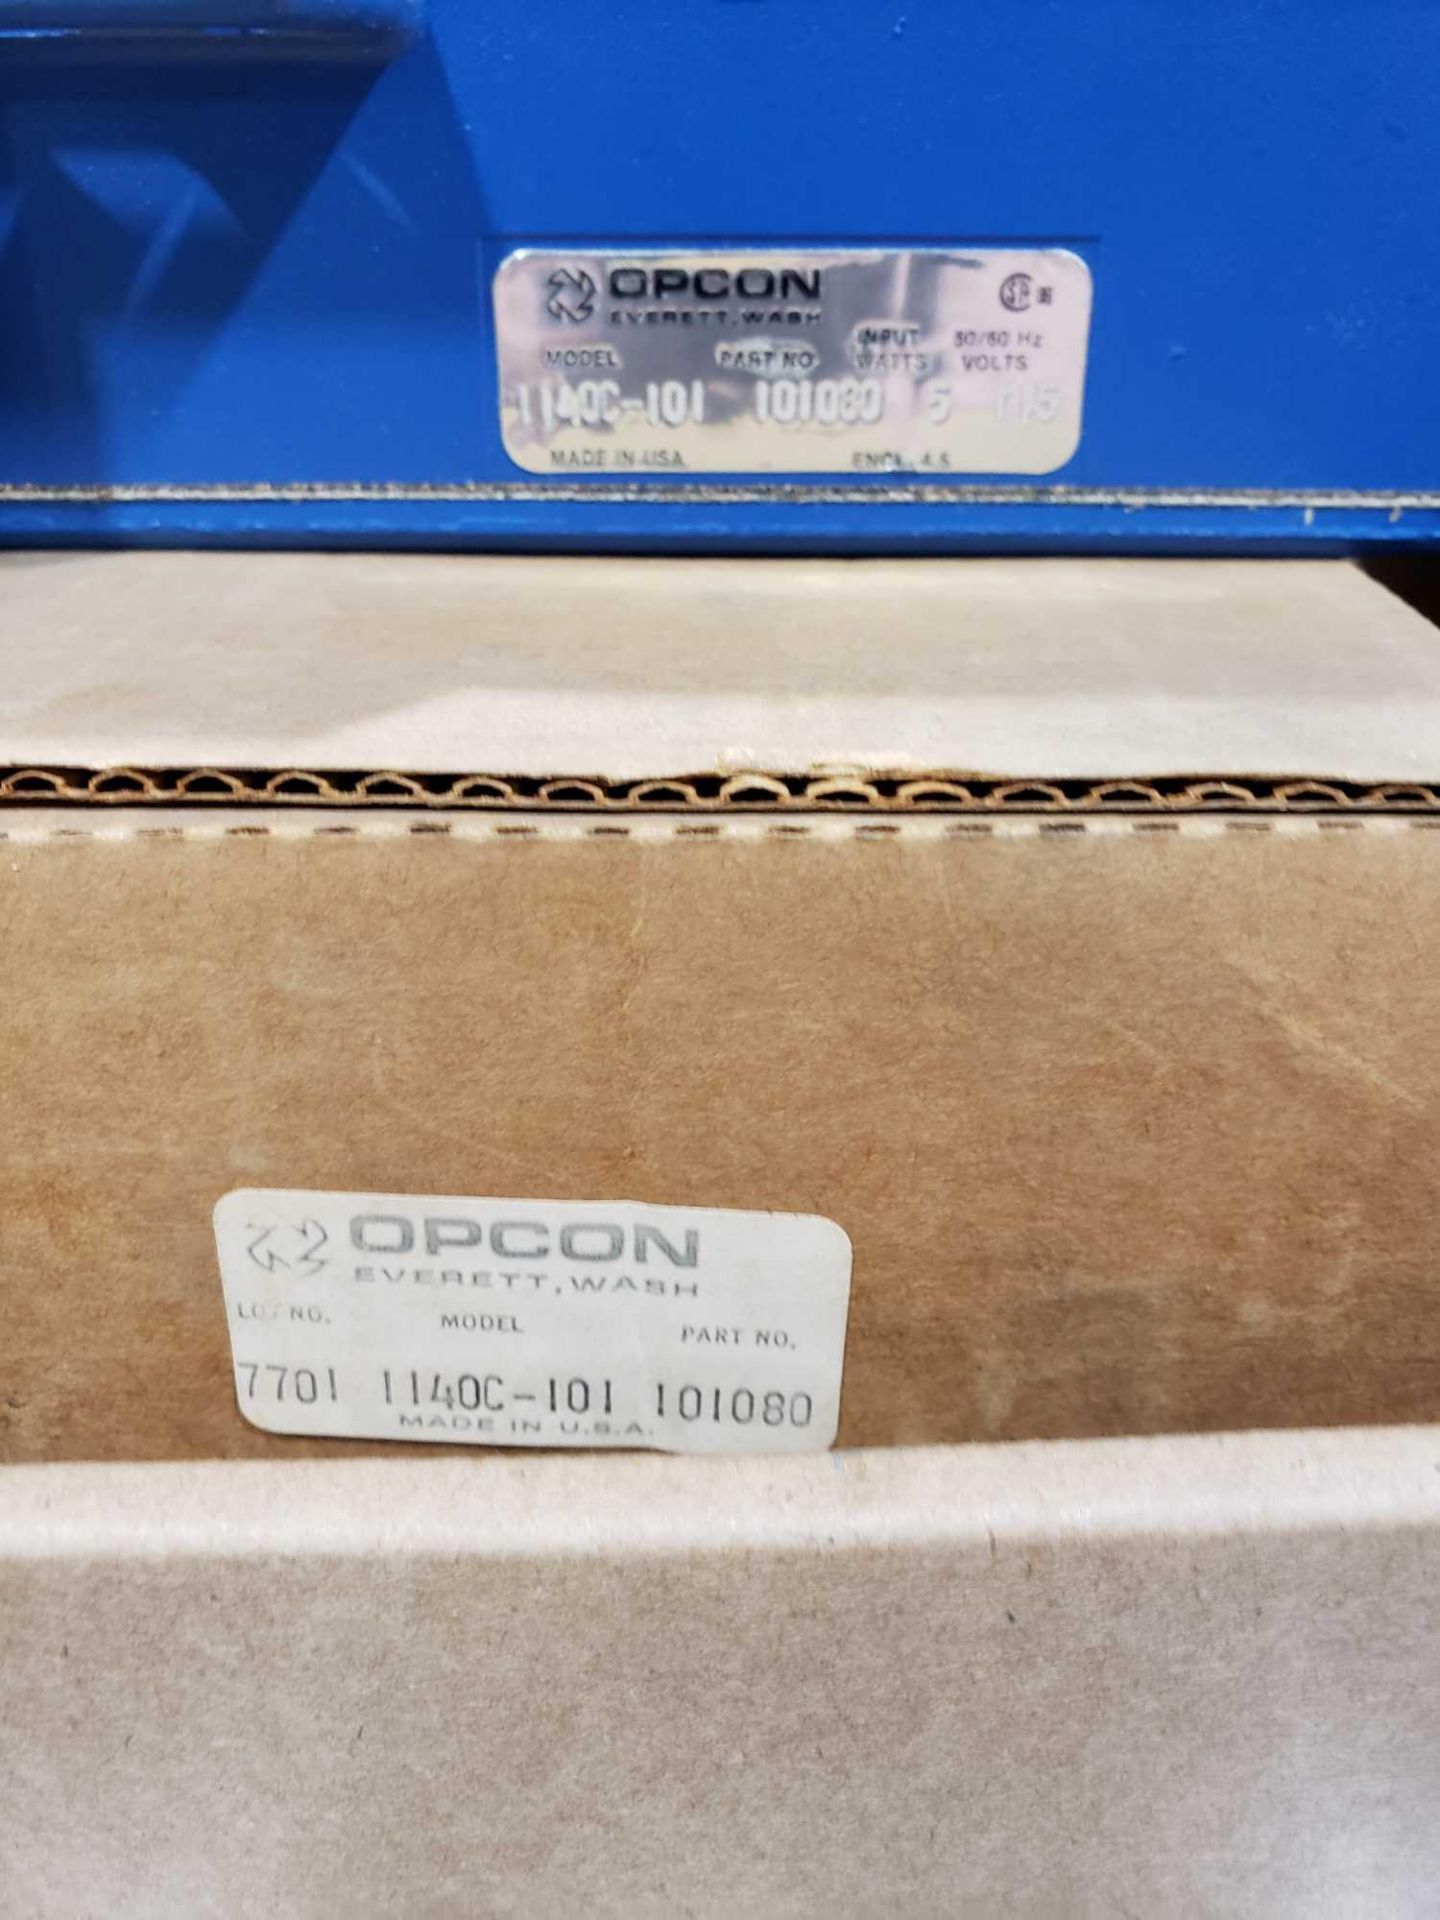 Opcon sensor model 1140C-101, part number 101080. New in box. - Image 2 of 3